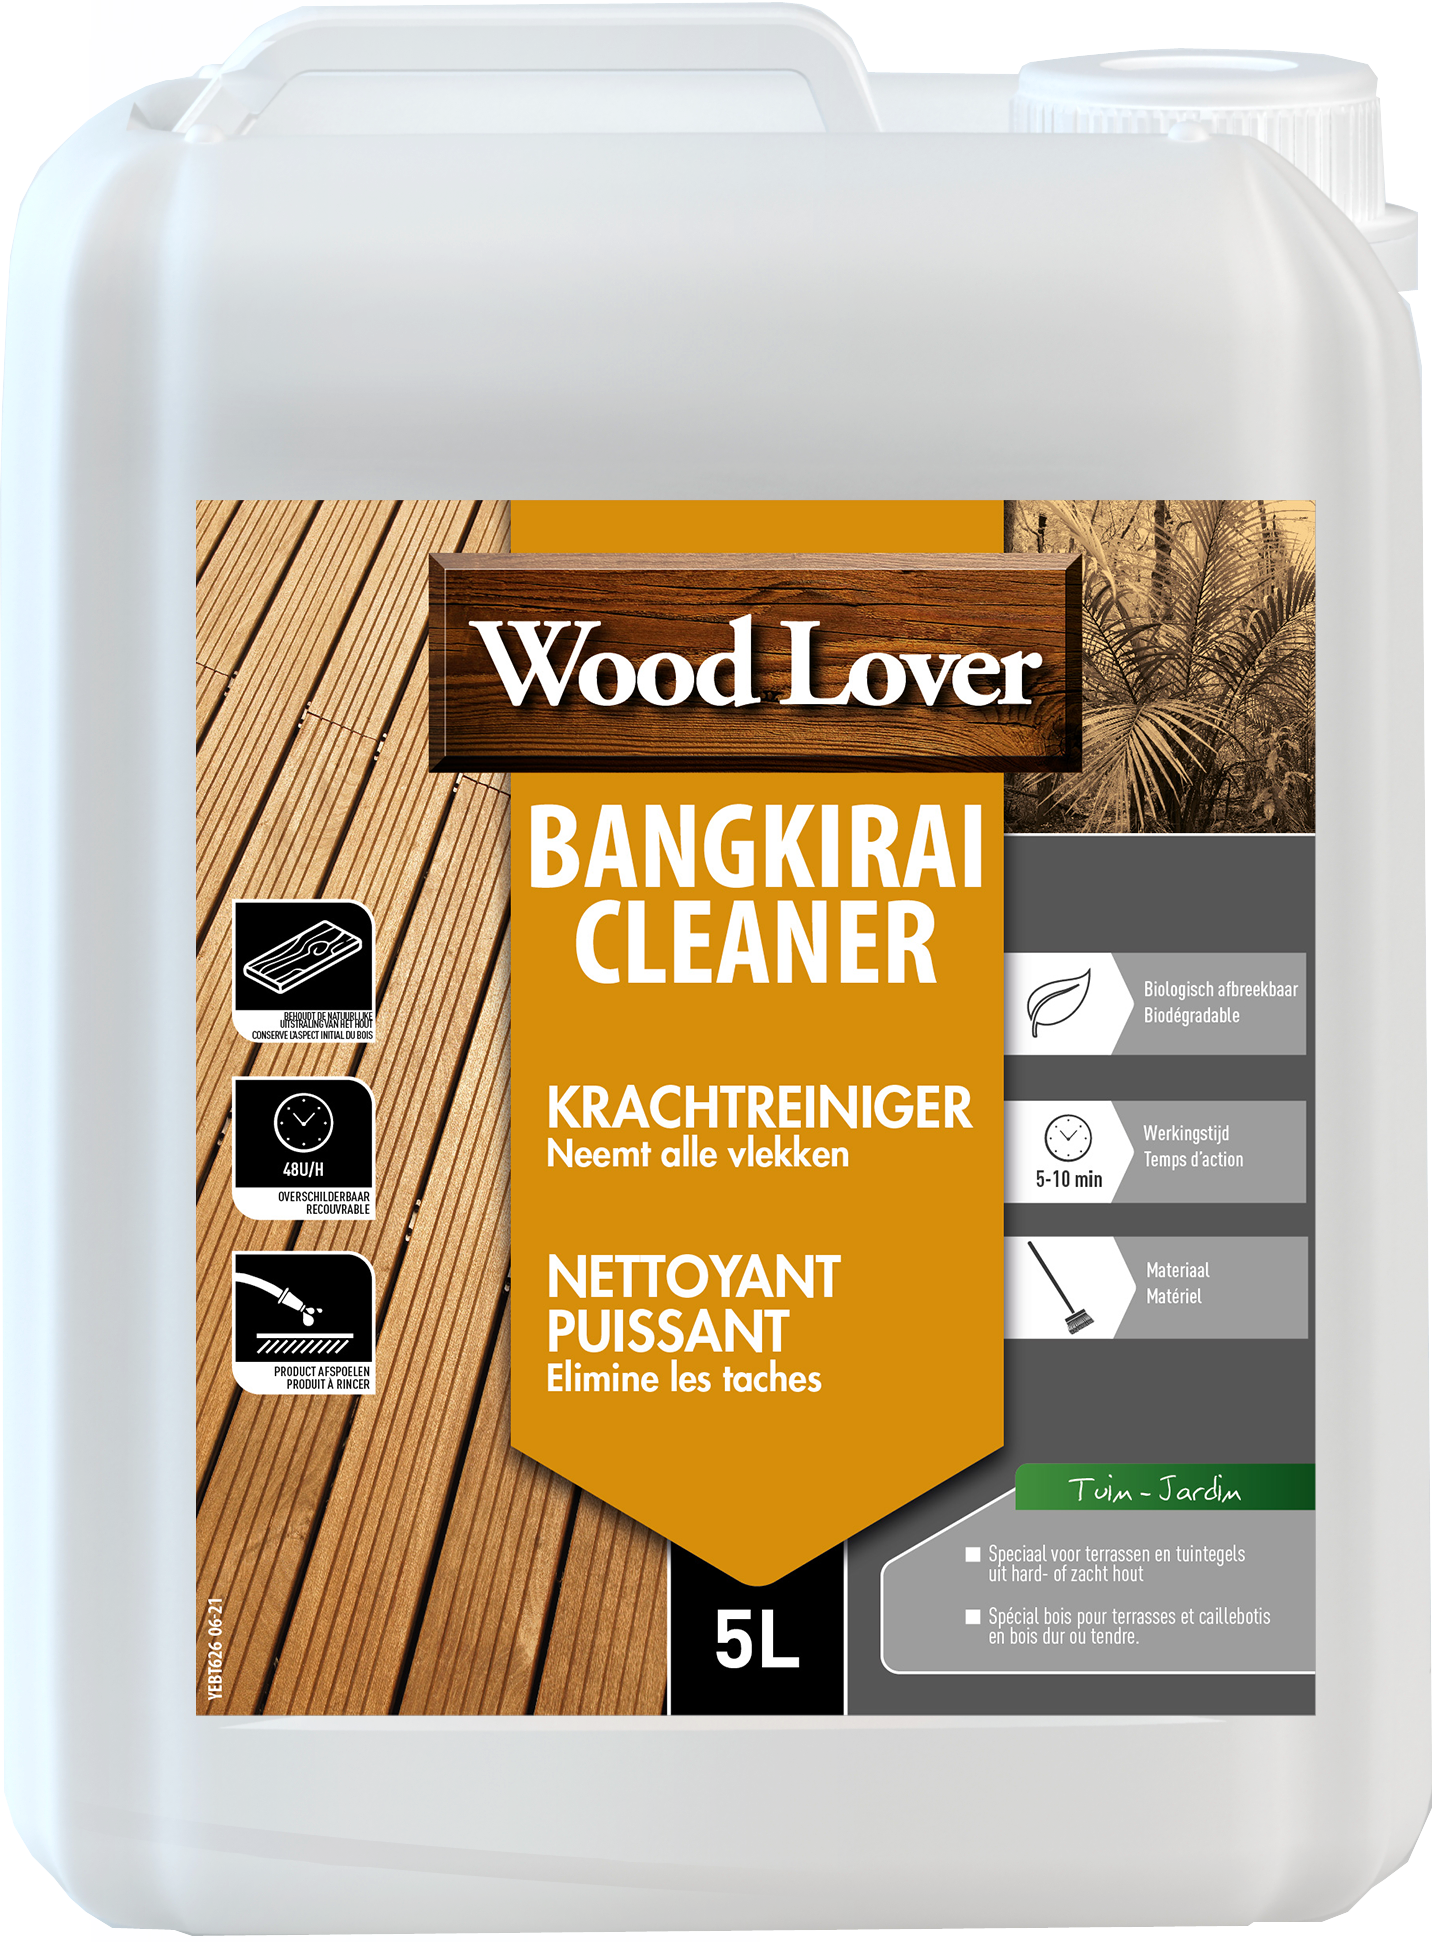 WoodLover Bangkirai Cleaner